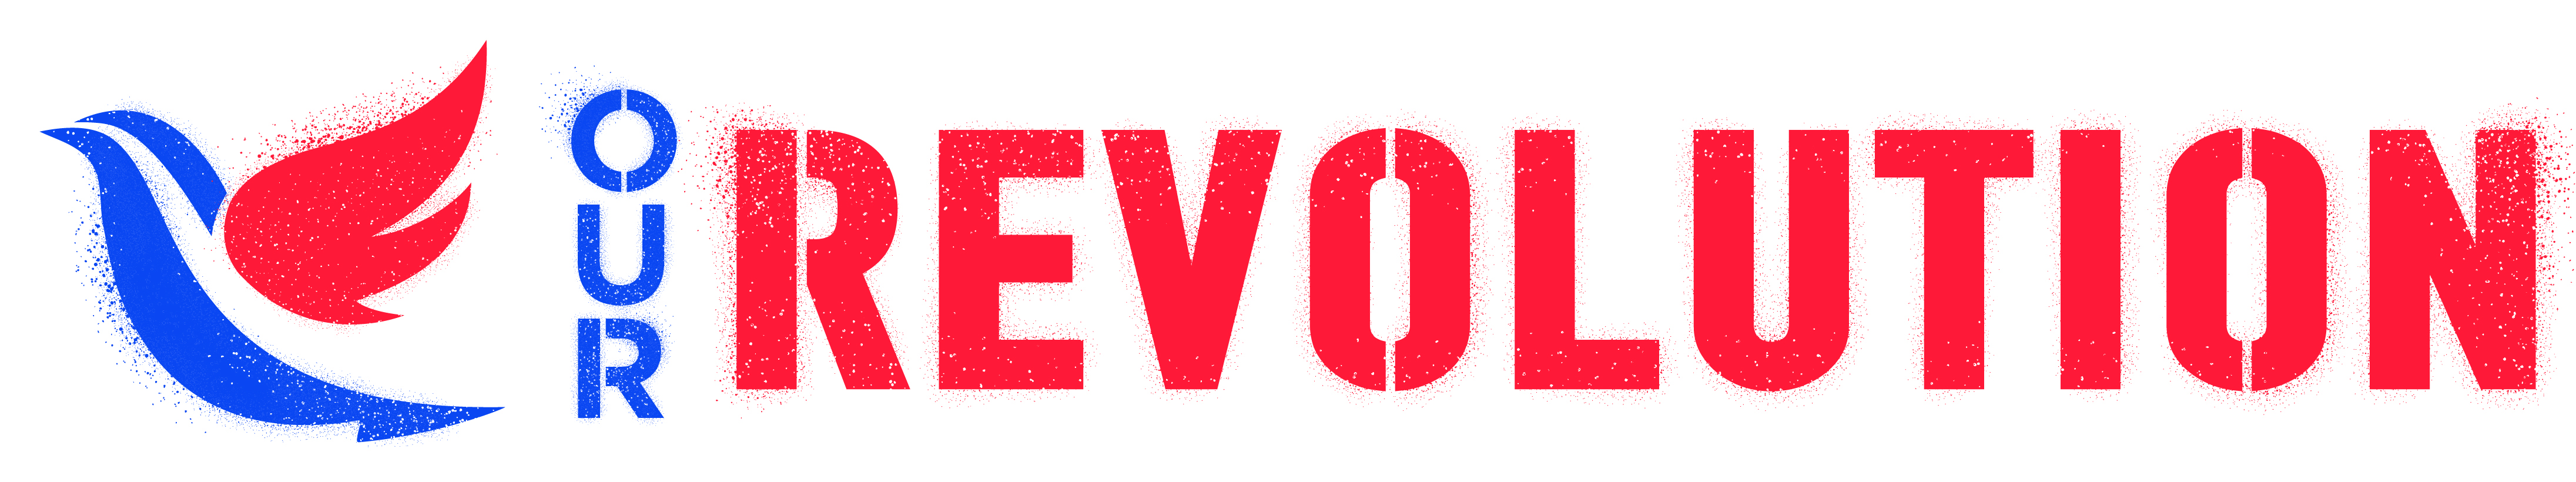 Our Revolution new logo 02